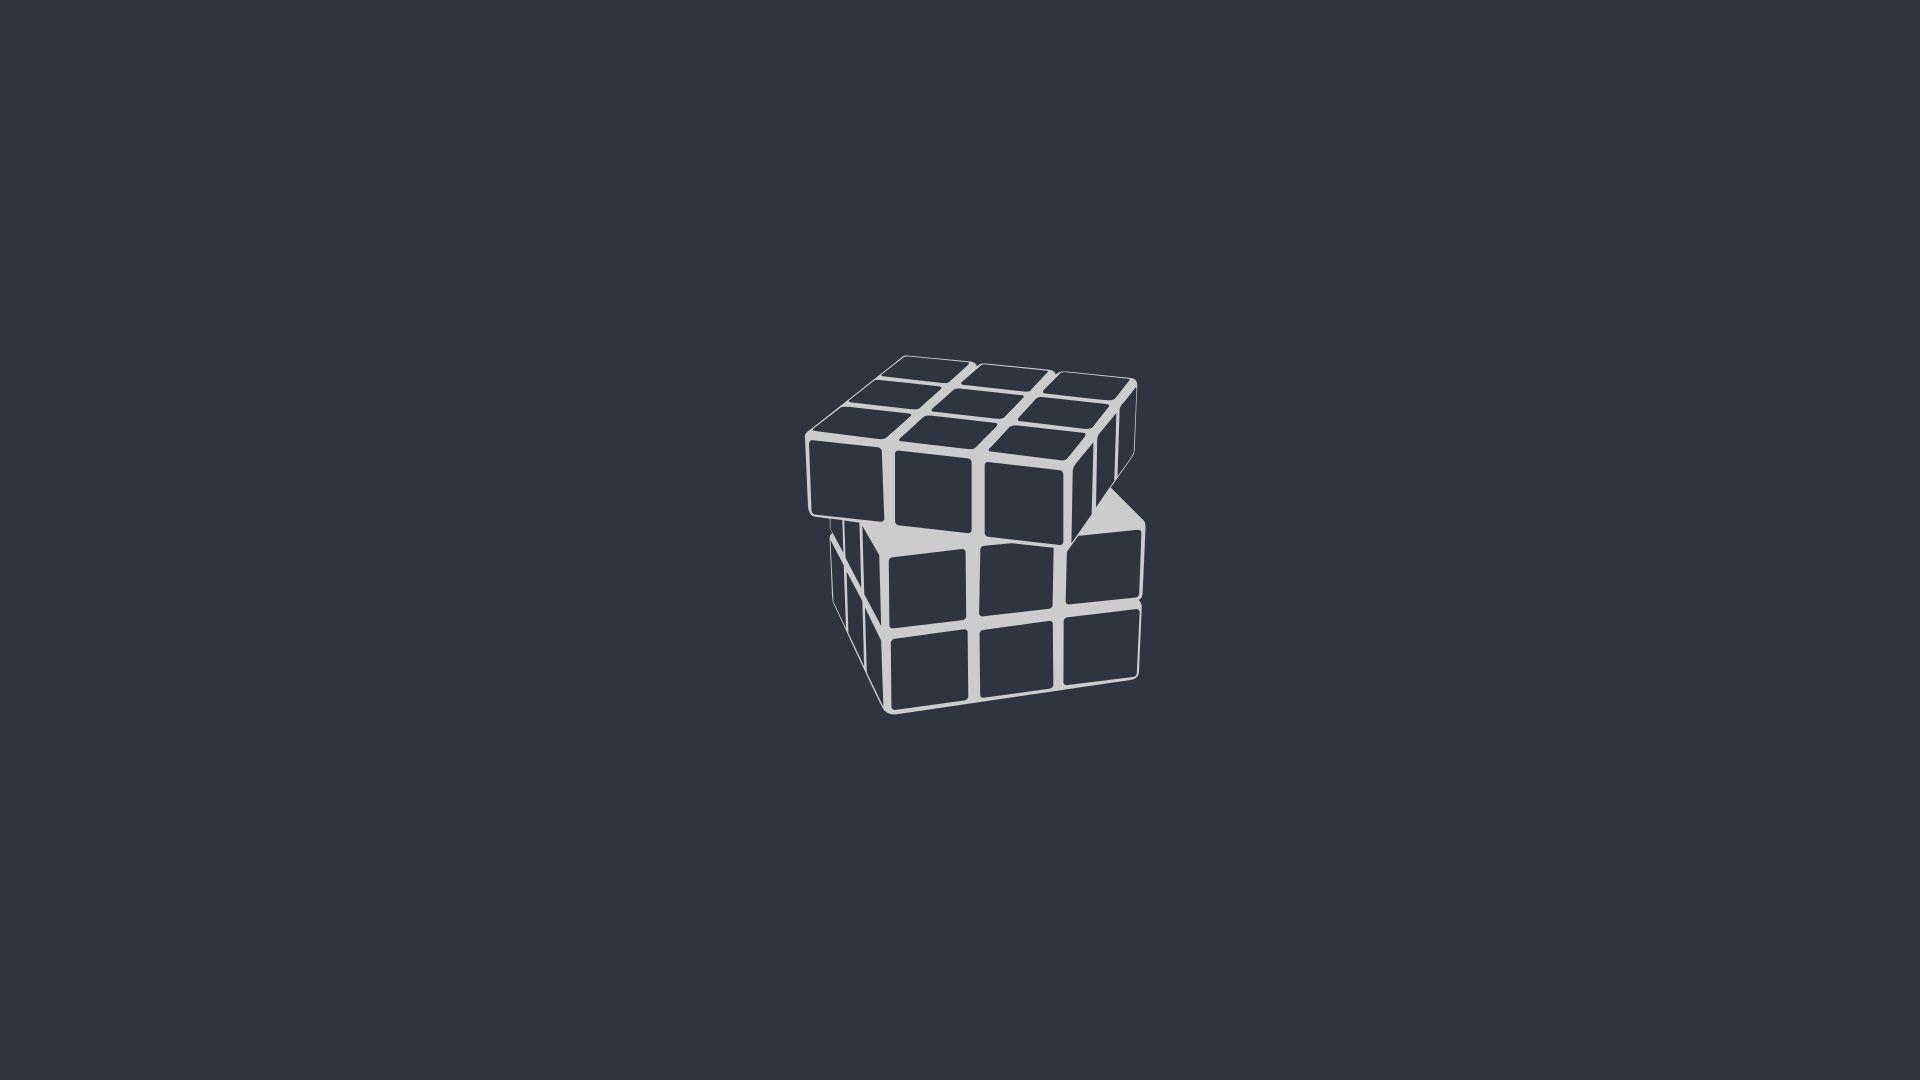 Rubiks Cube Minimalism, HD Artist, 4k Wallpapers, Image